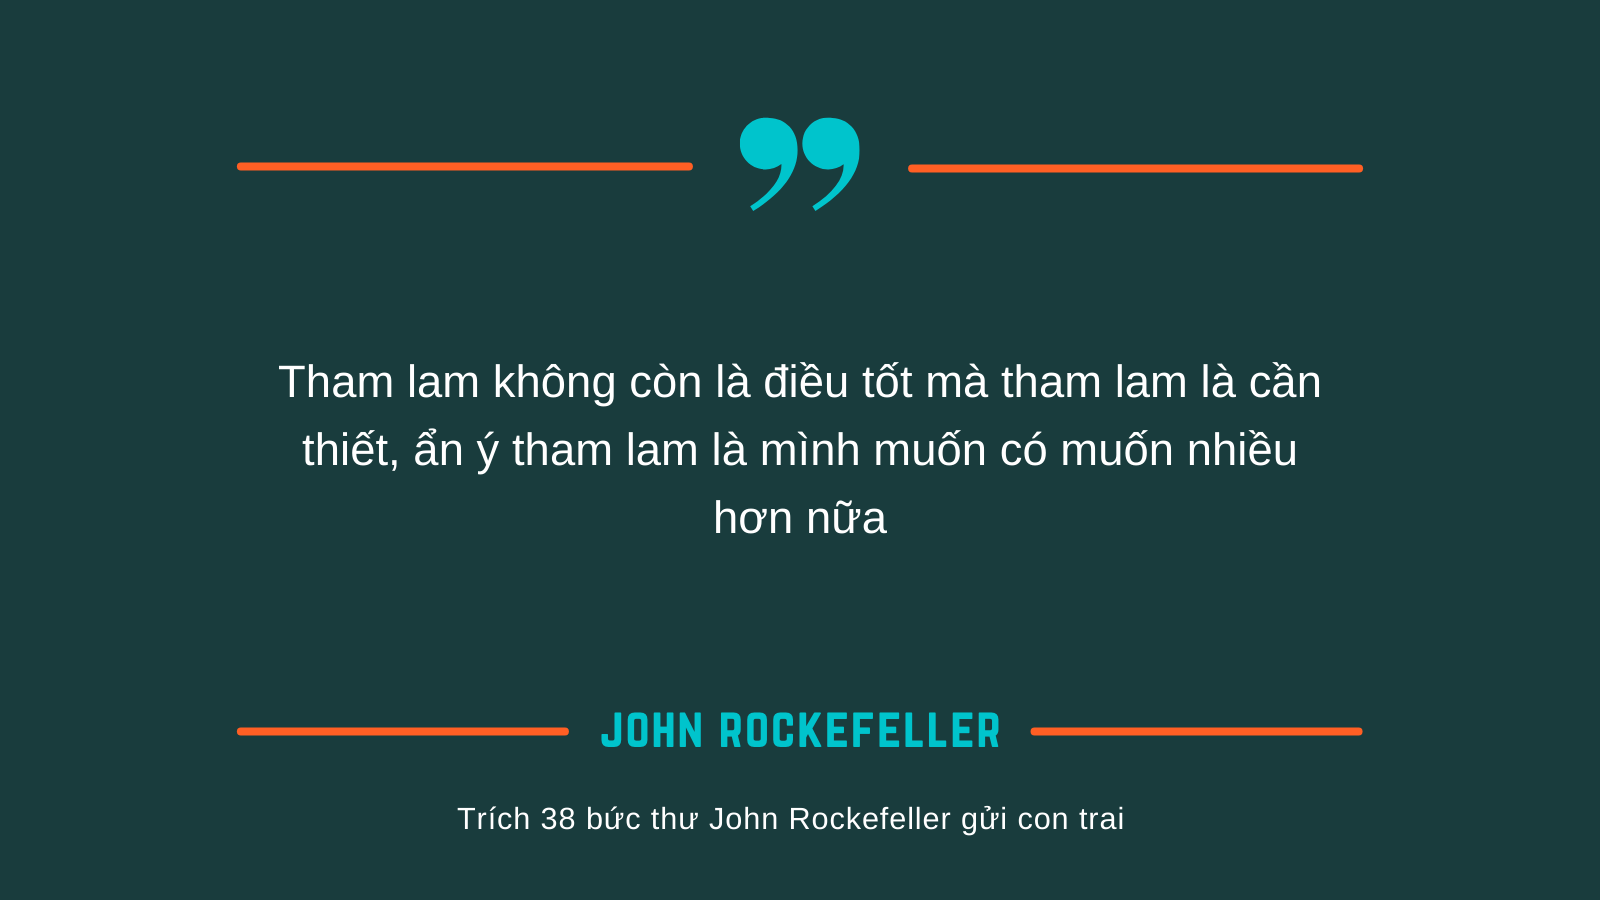 38 buc thu gui con trai cua John Rockefeller 16